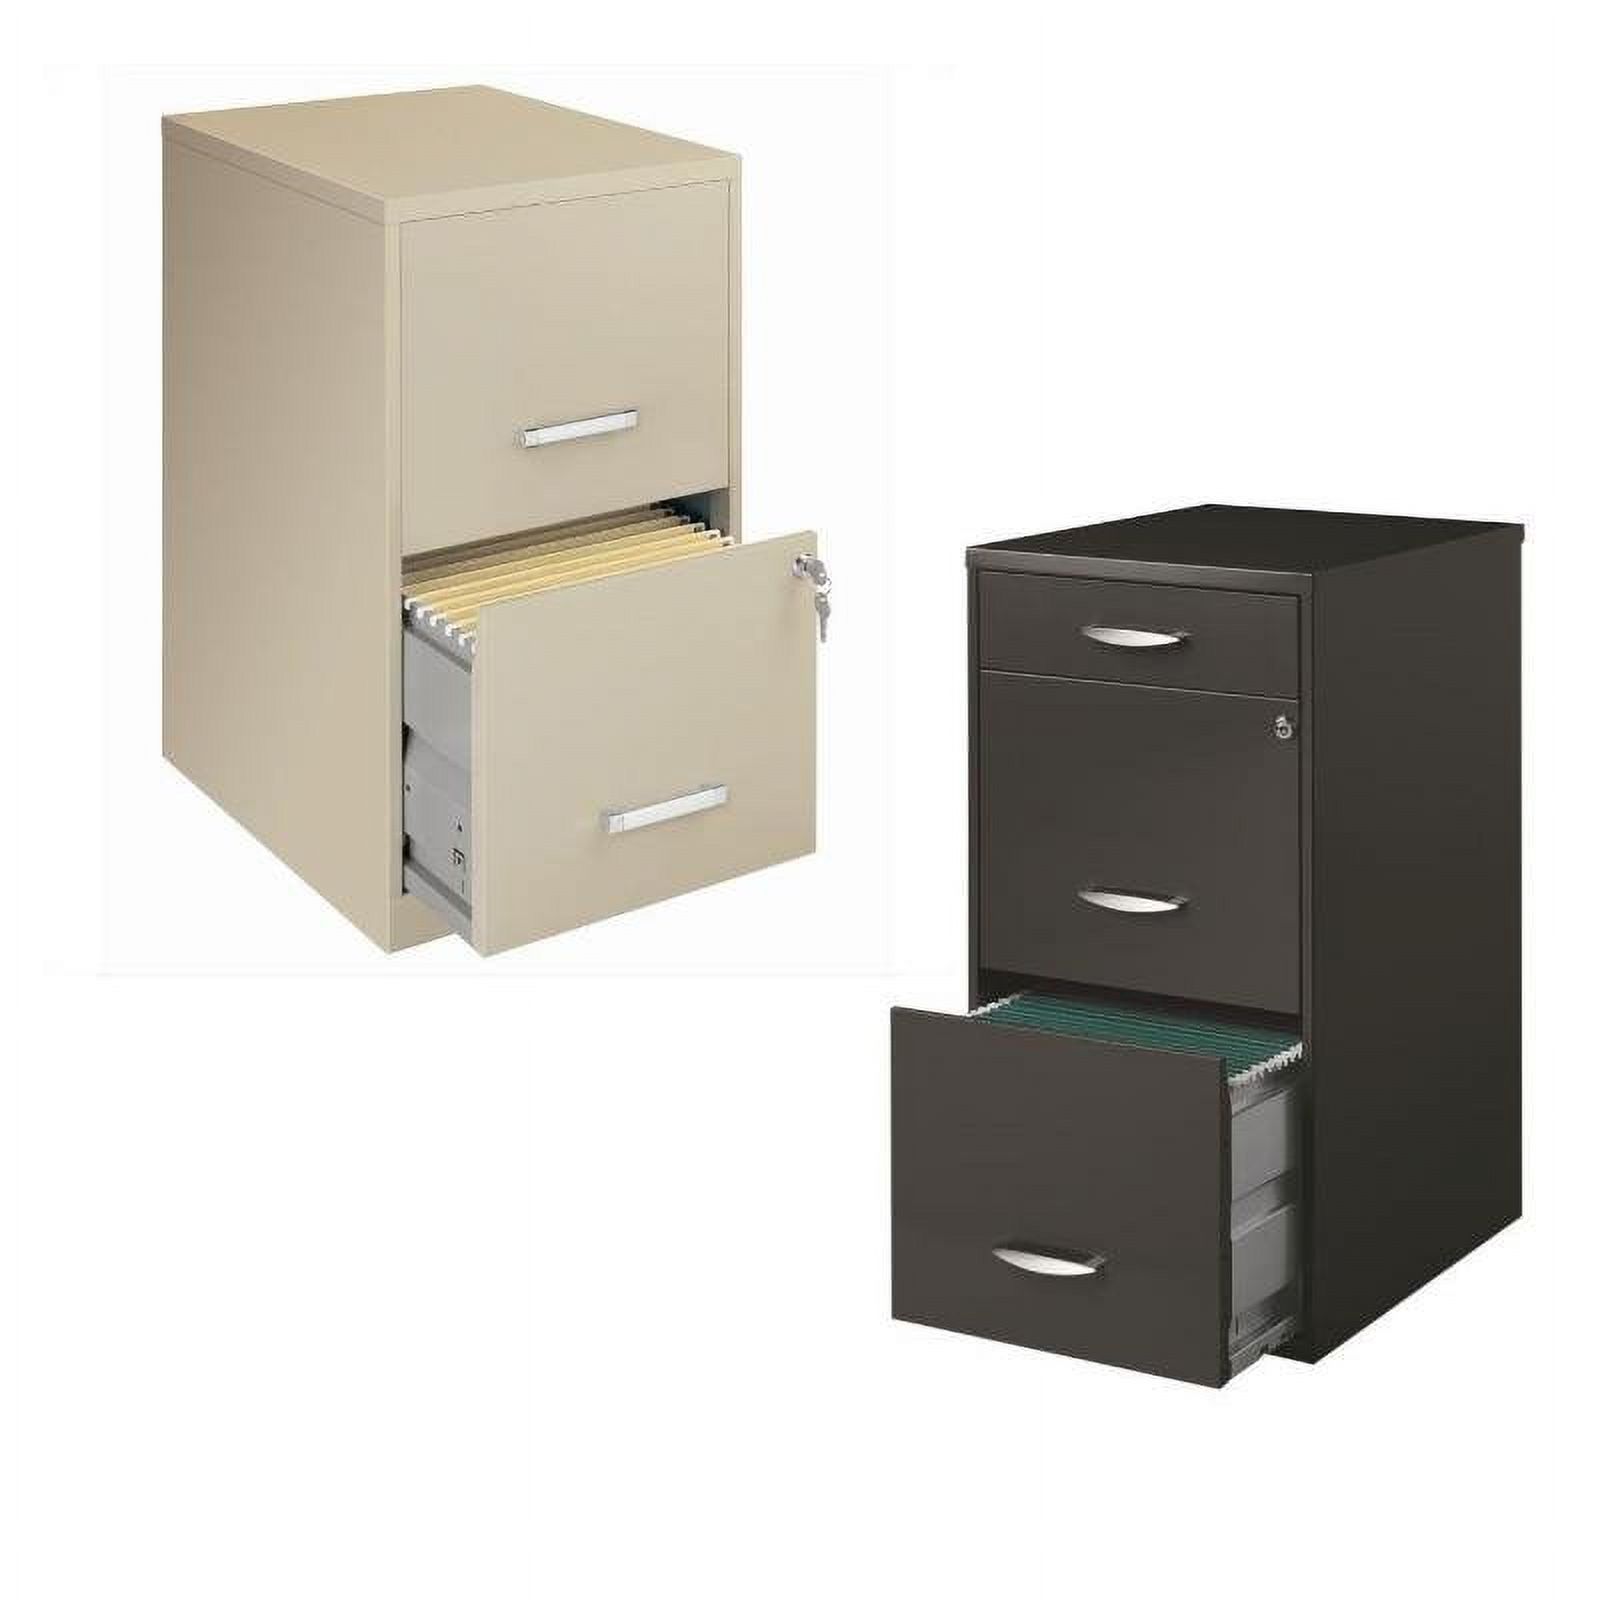 (Value Pack) 2 Drawer Letter File Cabinet and 3 Drawer File Cabinet - image 1 of 3